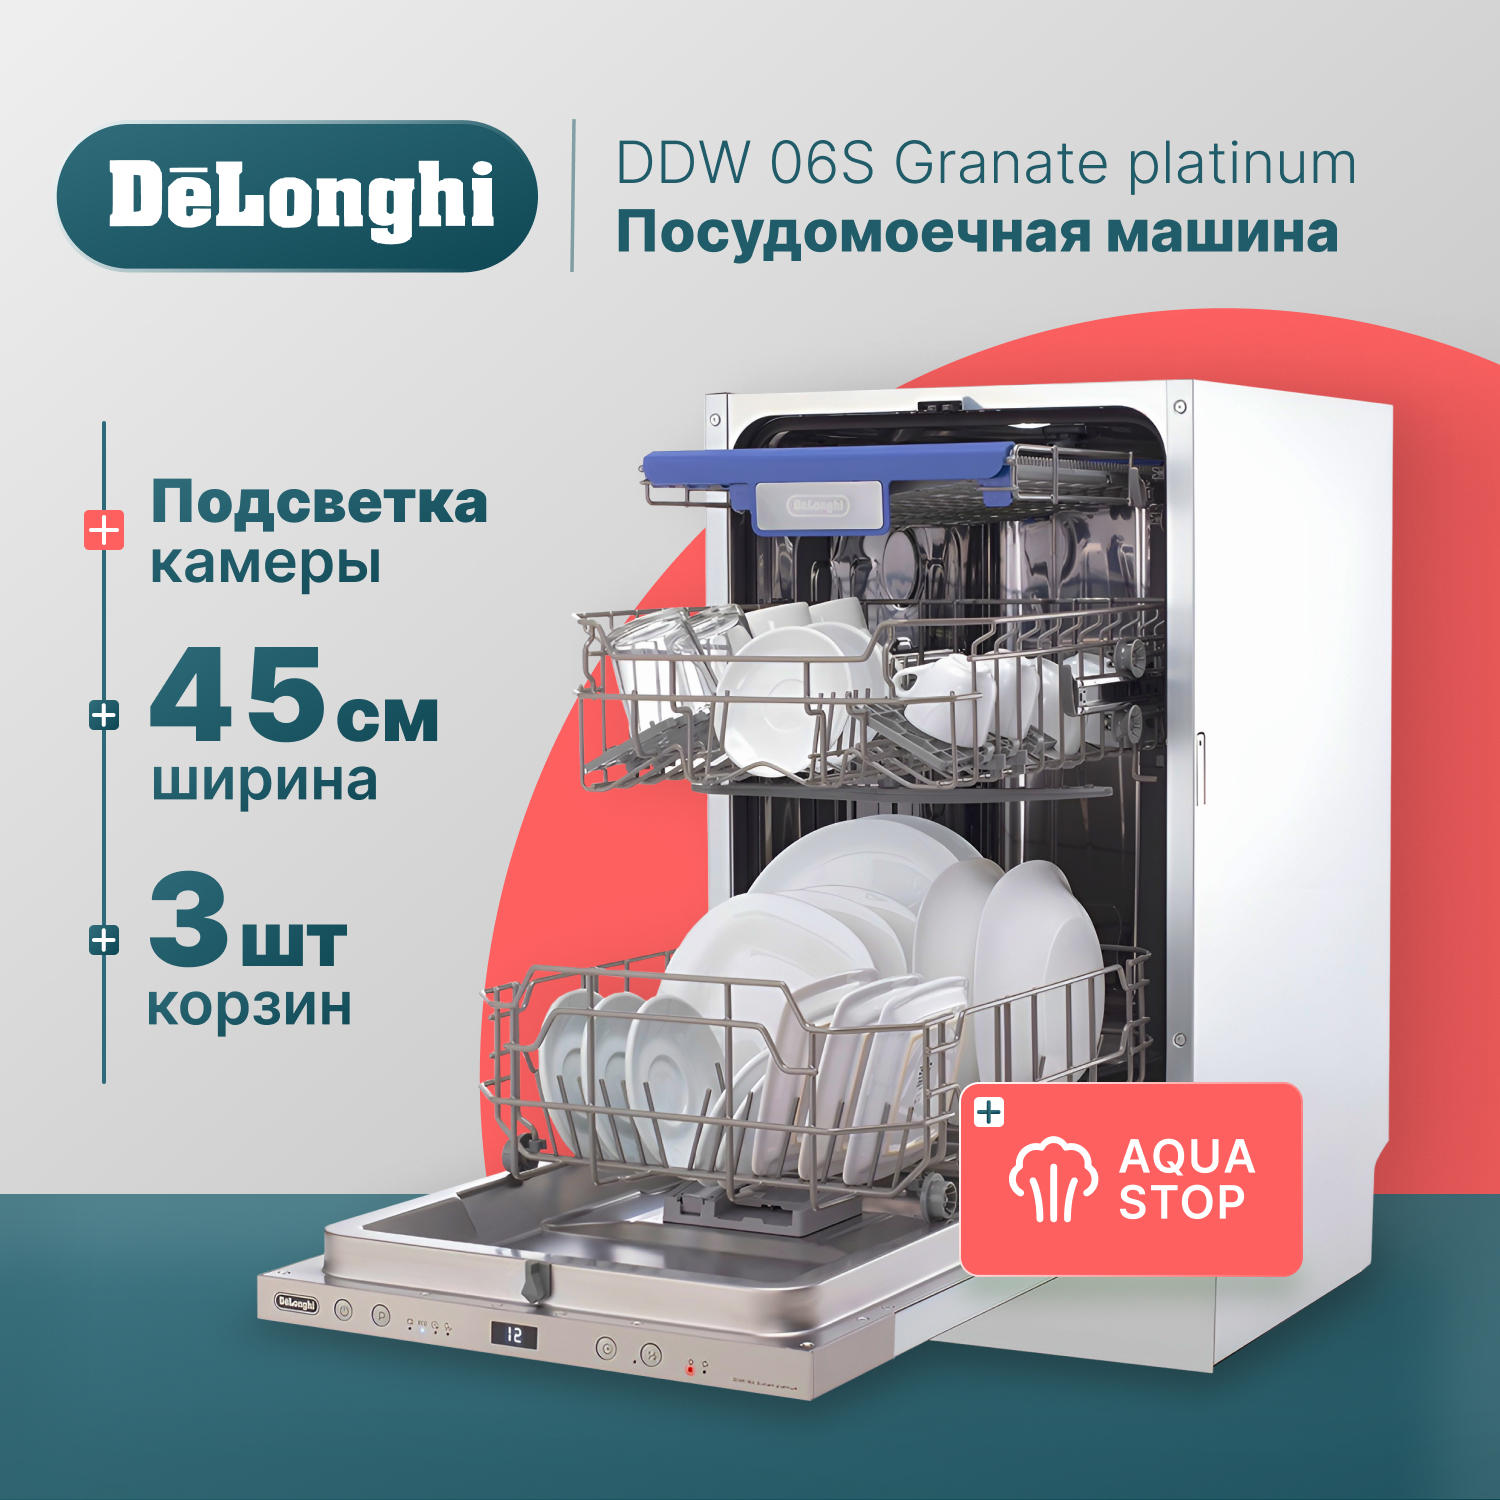 Встраиваемая посудомоечная машина Delonghi DDW06S Granate platinum полновстраиваемая посудомоечная машина de’longhi ddw 06 f supreme nova